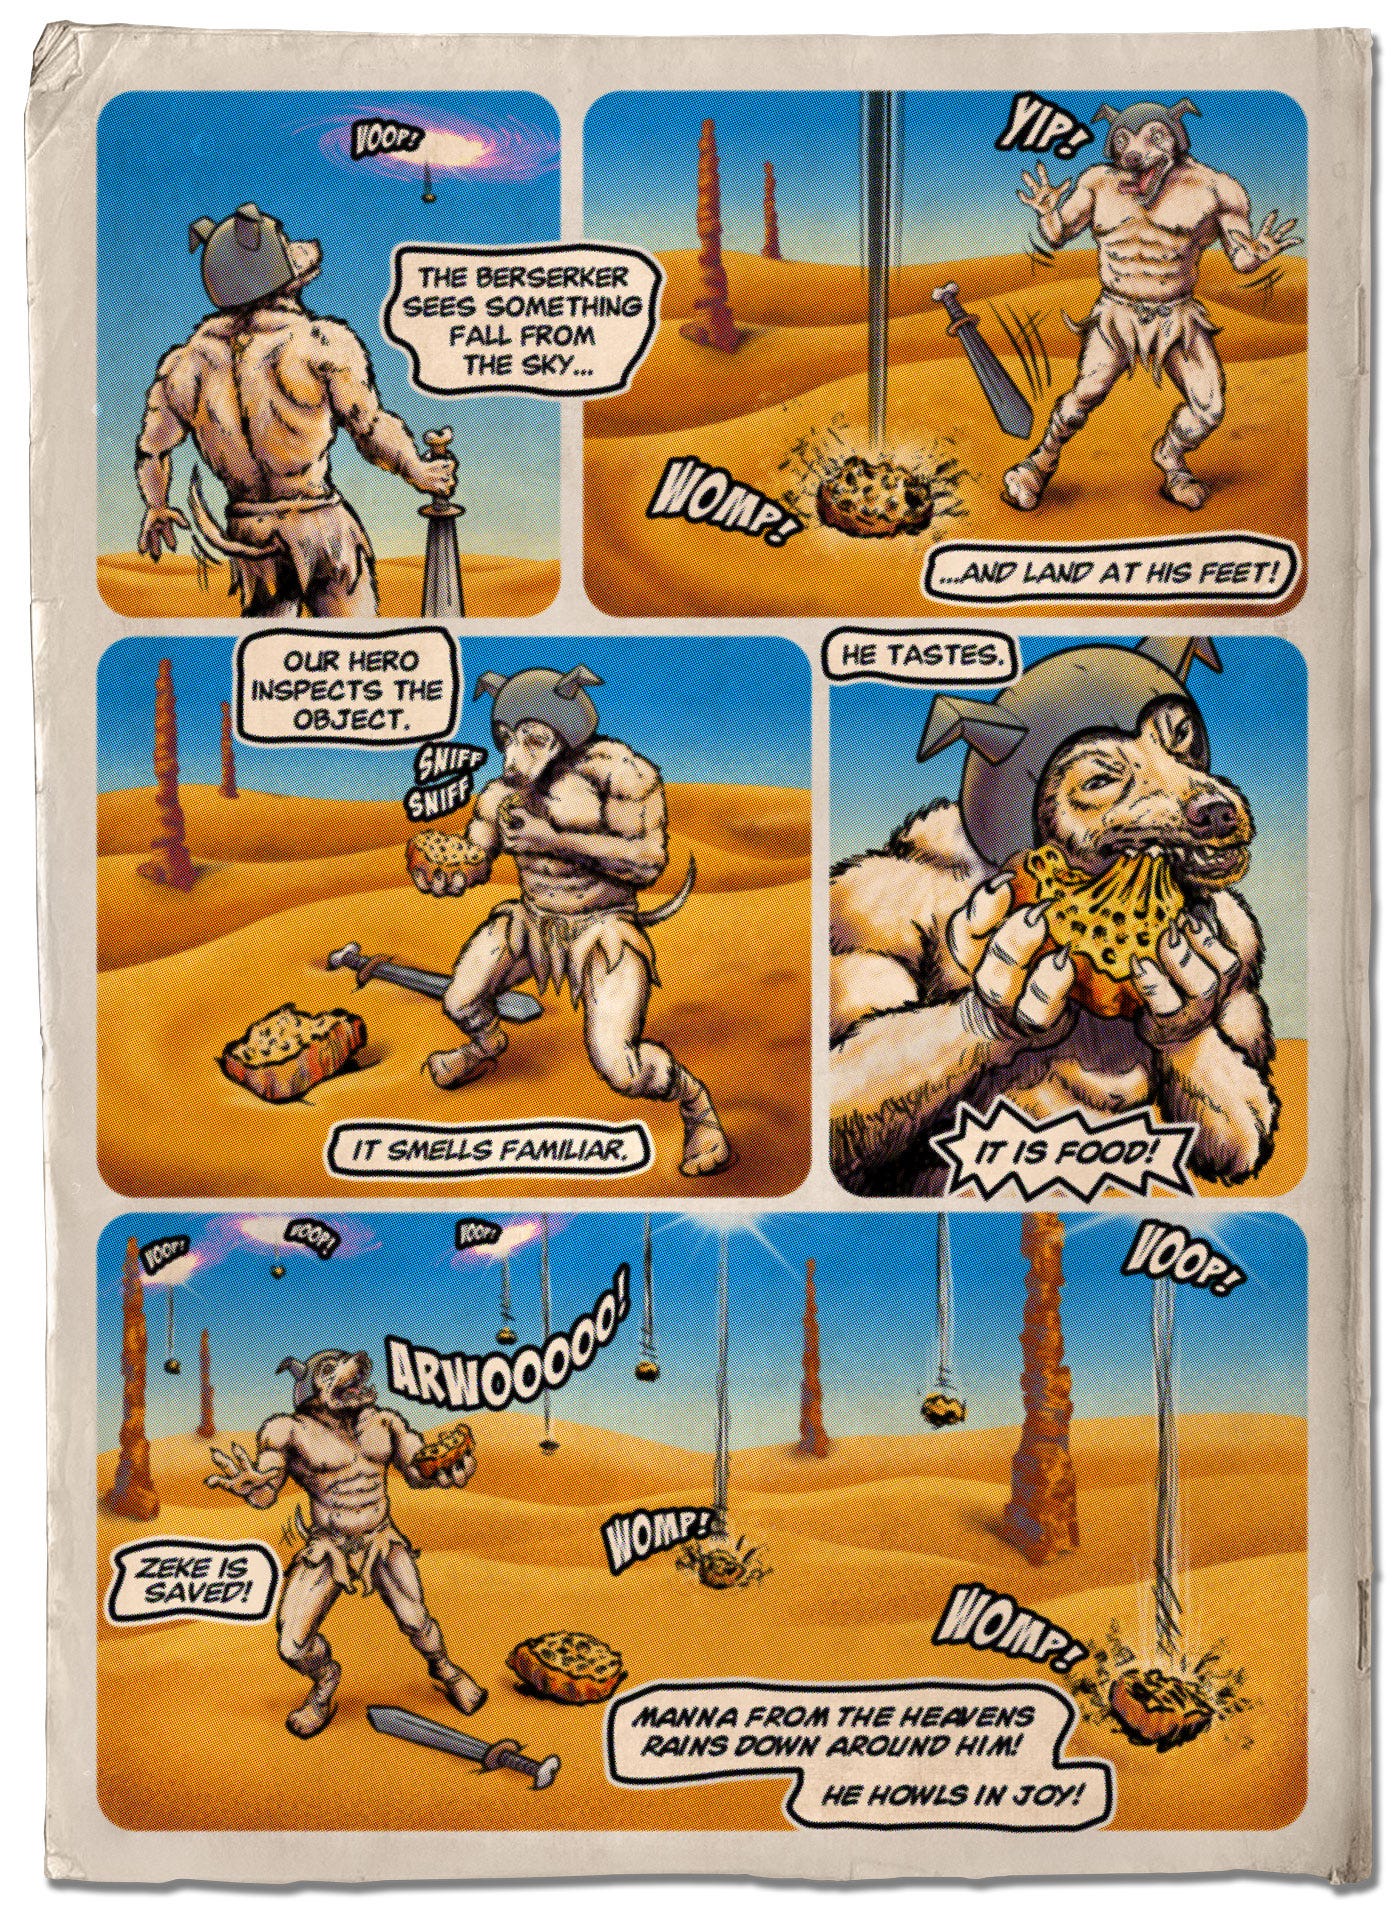 The Sloppy Gods Page 3 comic by ER Flynn